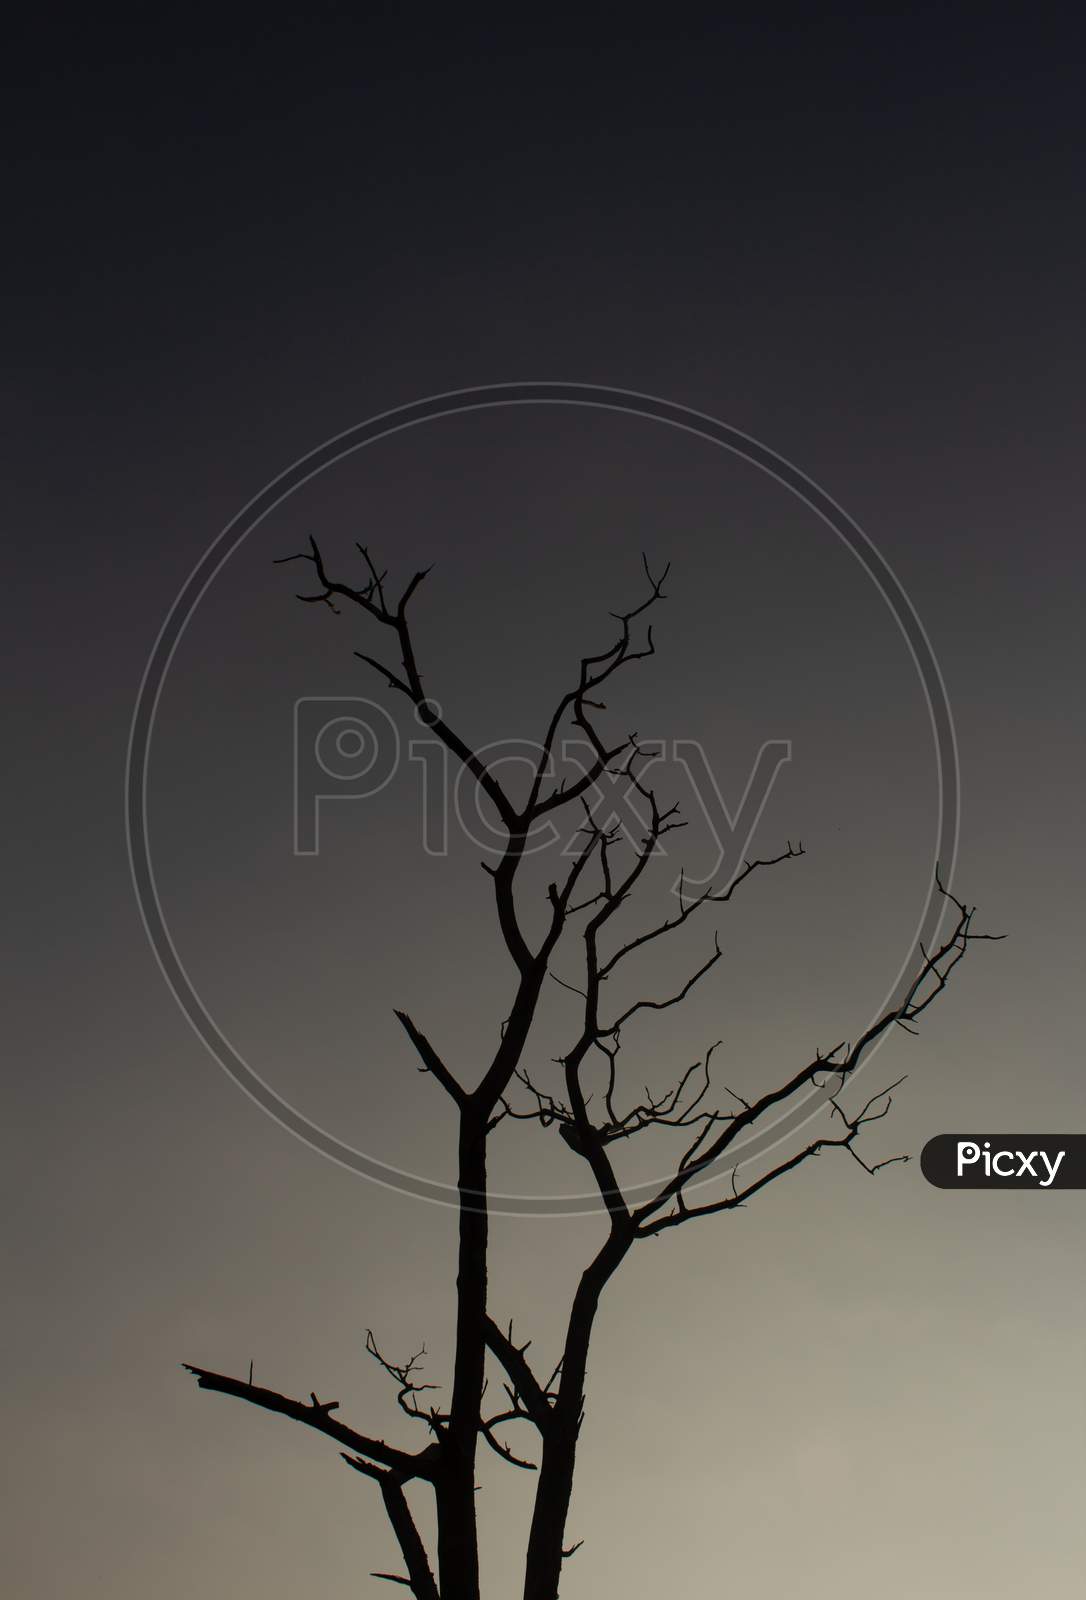 Tree With No Leaves Against Sky Background In Masinagudi, Mudumalai National Park, Tamil Nadu - Karnataka State Border, India. Tree Silhouette Against Sky Background.